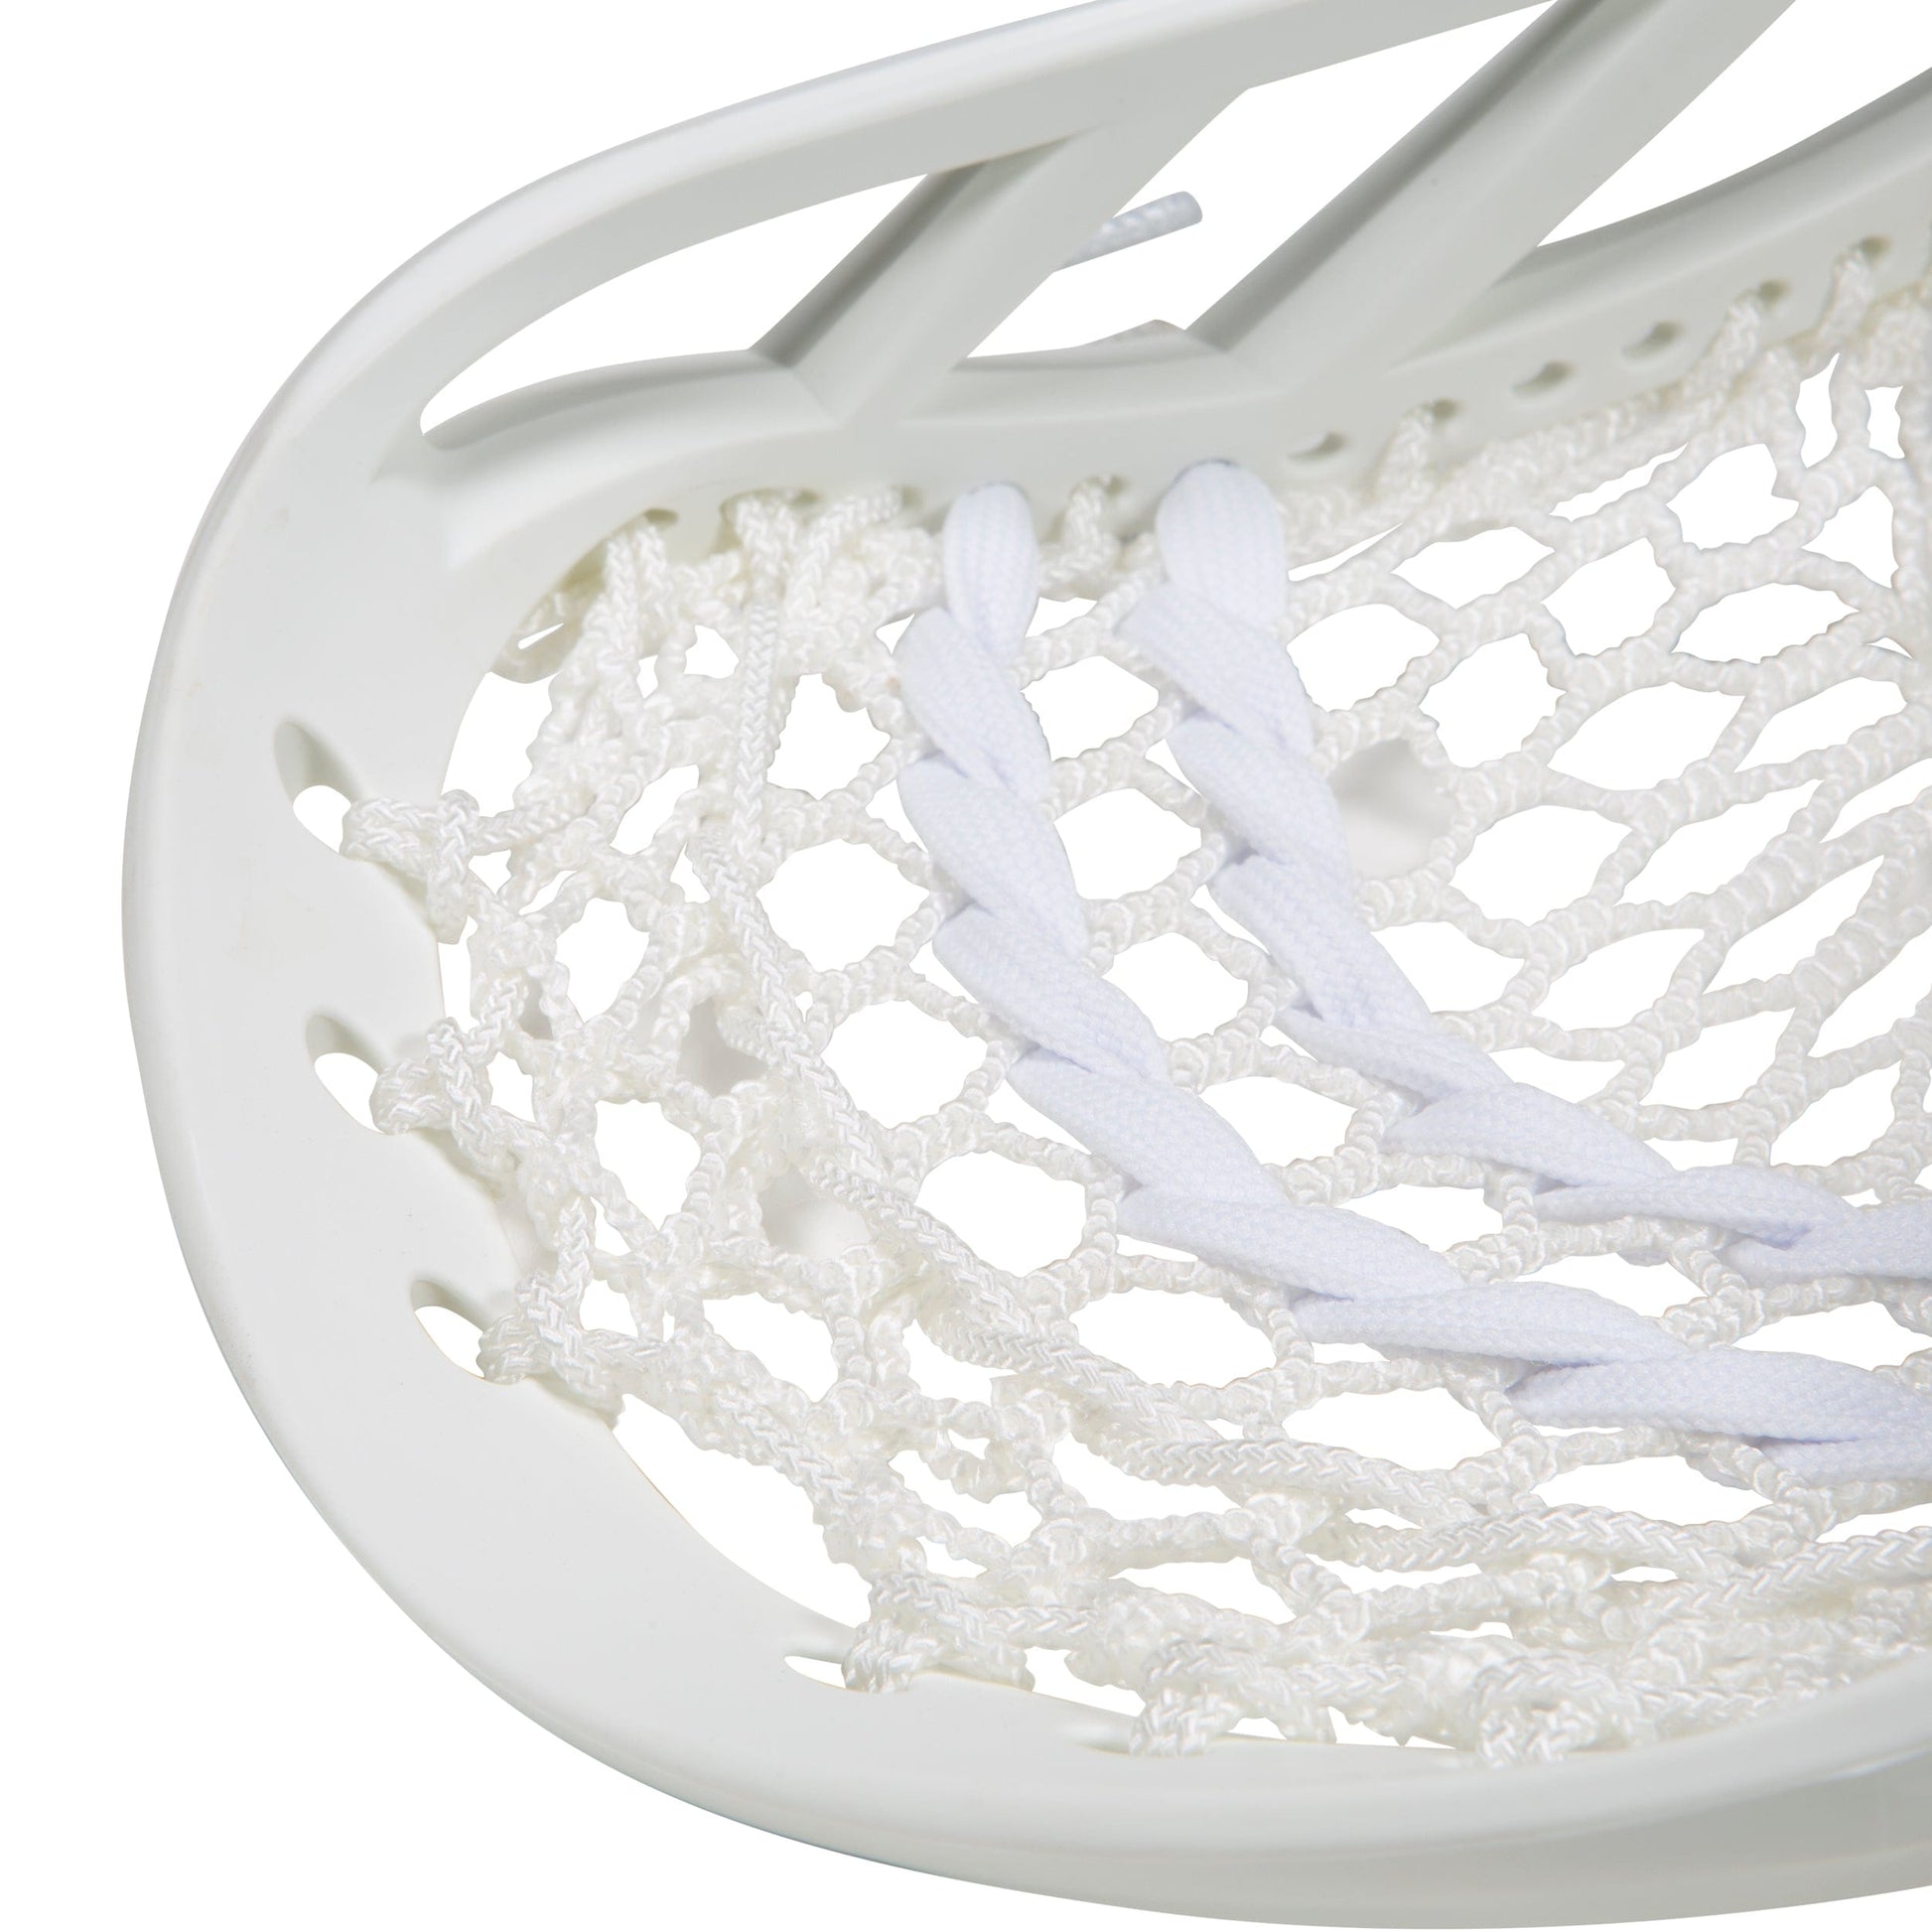 Carbon Pro Defensive Complete Lacrosse Stick | 60" | White Signature Lacrosse